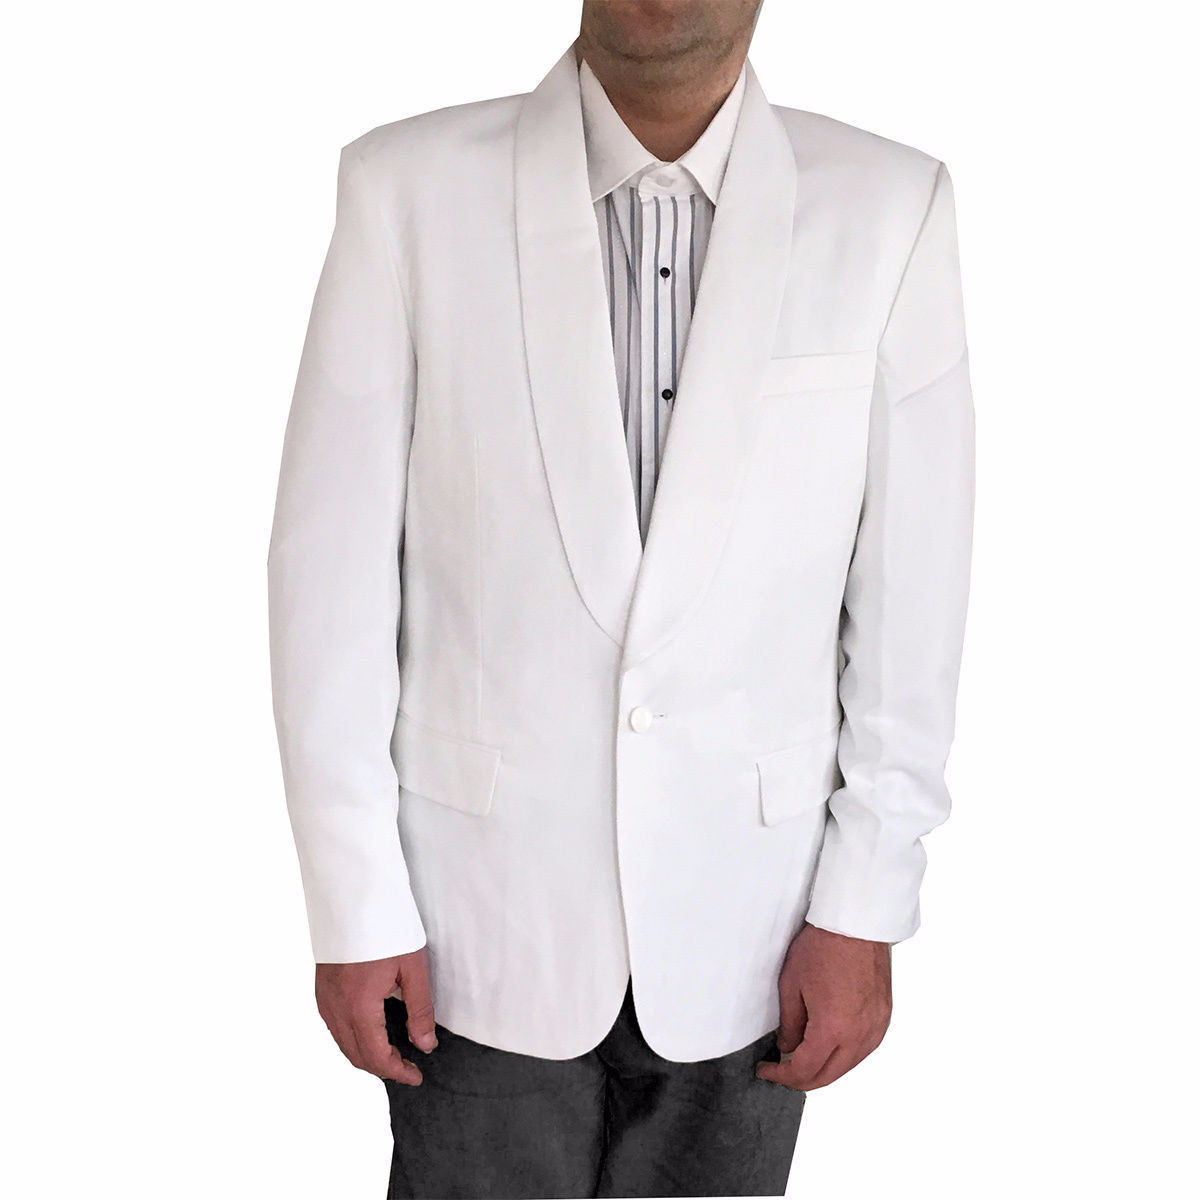 Men's White Tuxedo Dinner Jacket with Shawl Collar